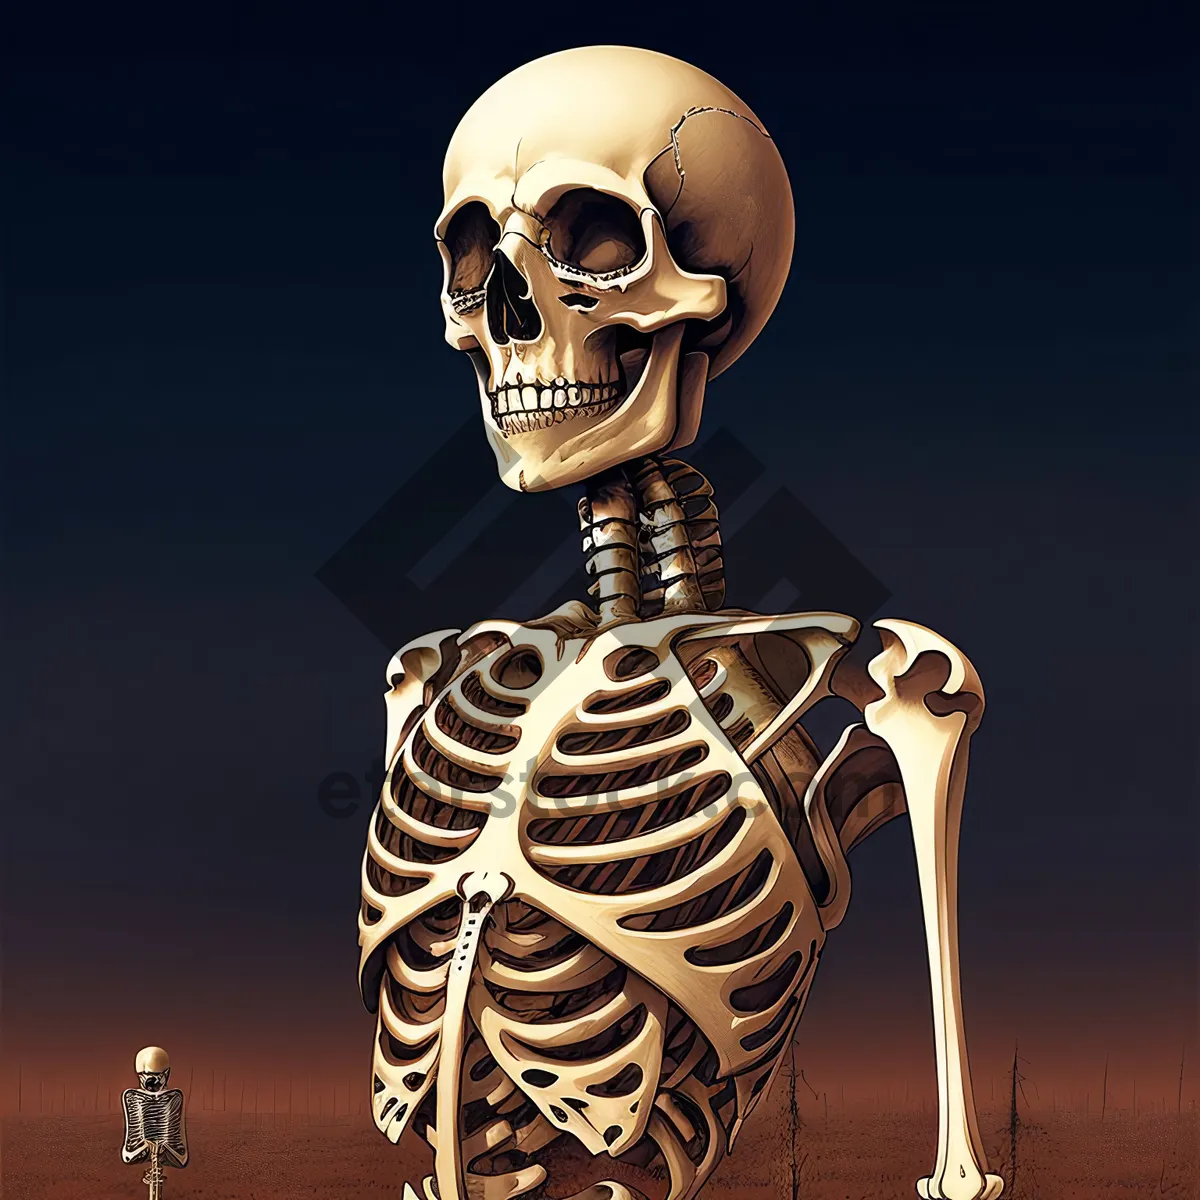 Picture of Frightening skeletal horror baron in 3D.